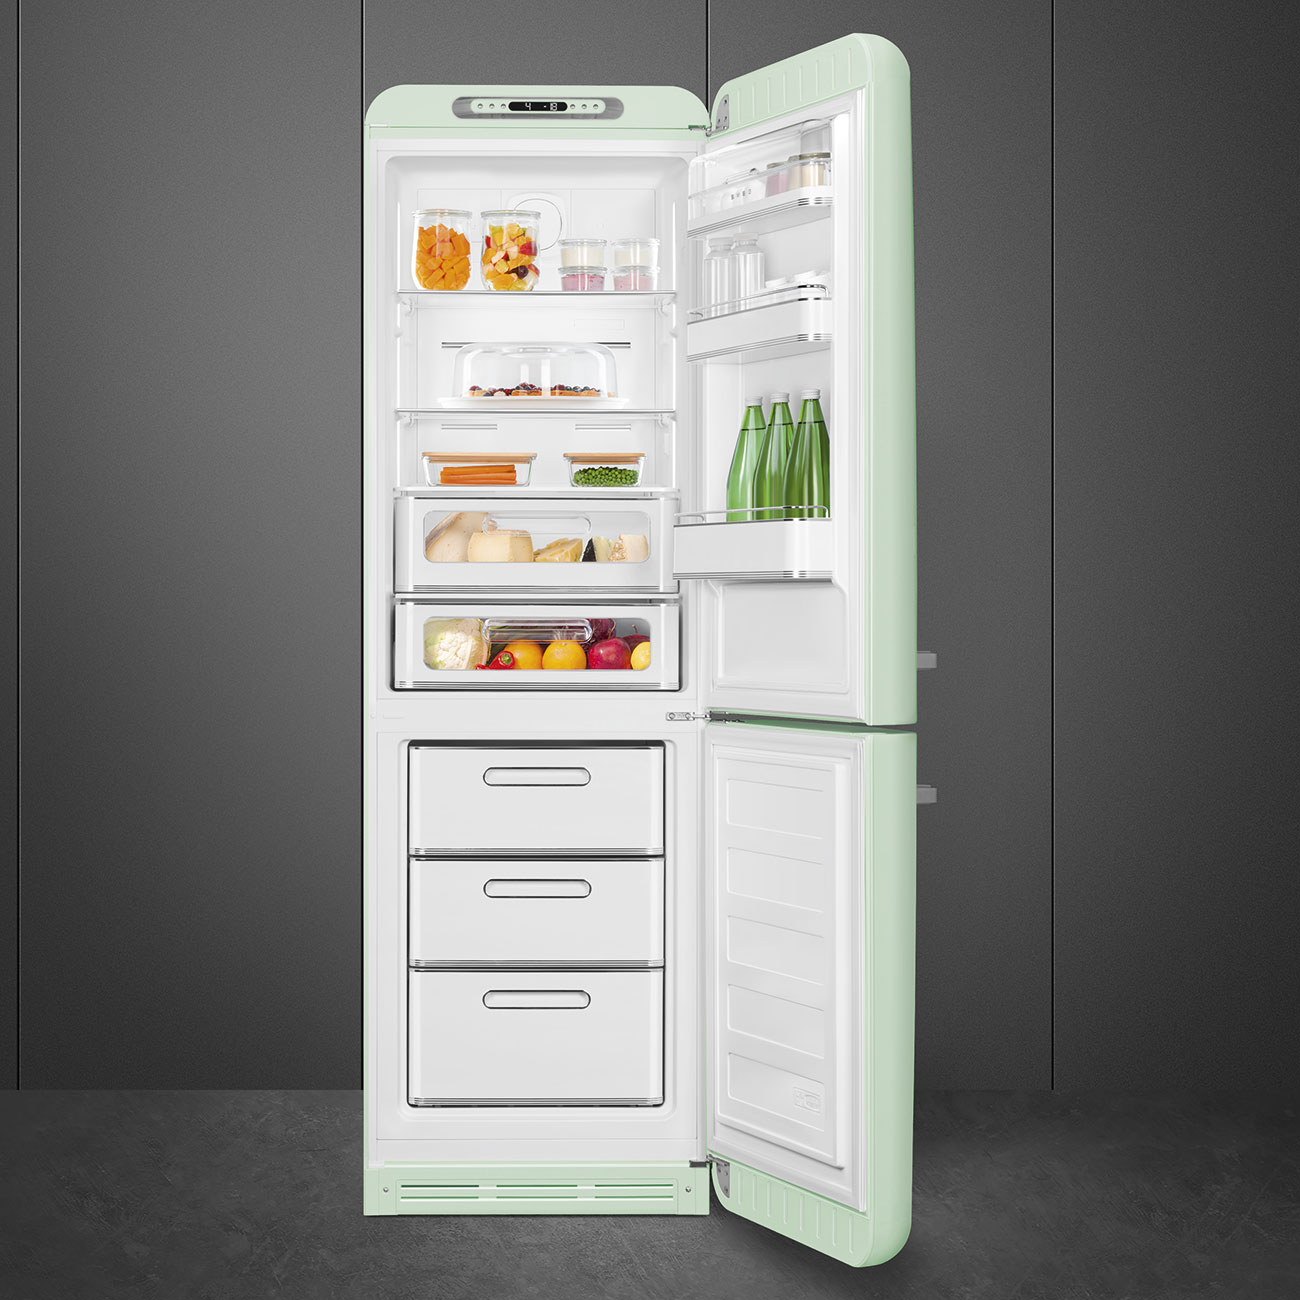 Pastel green refrigerator - Smeg_7